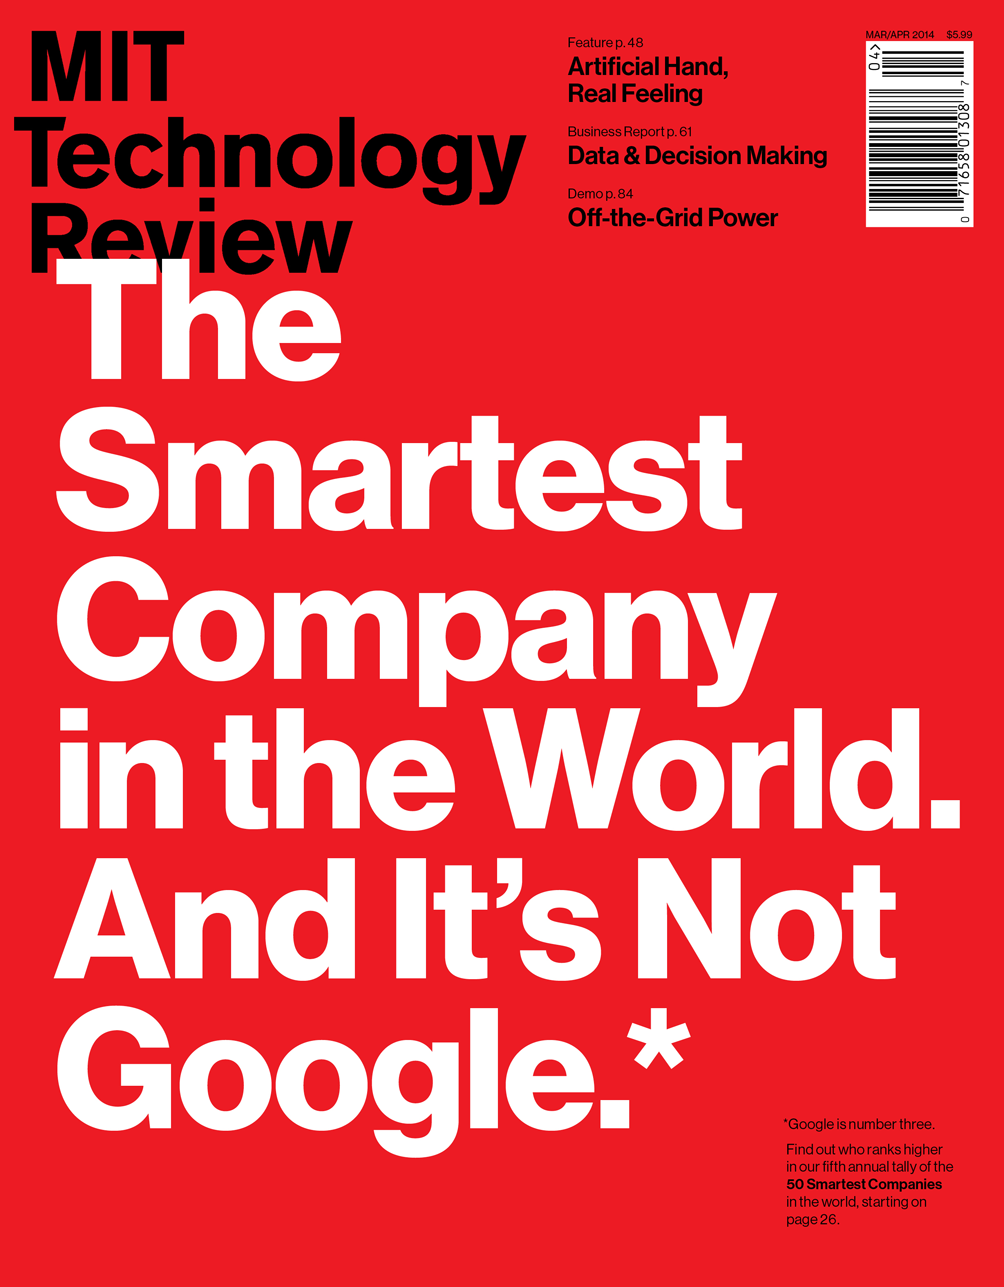 50 Smartest Companies 2014